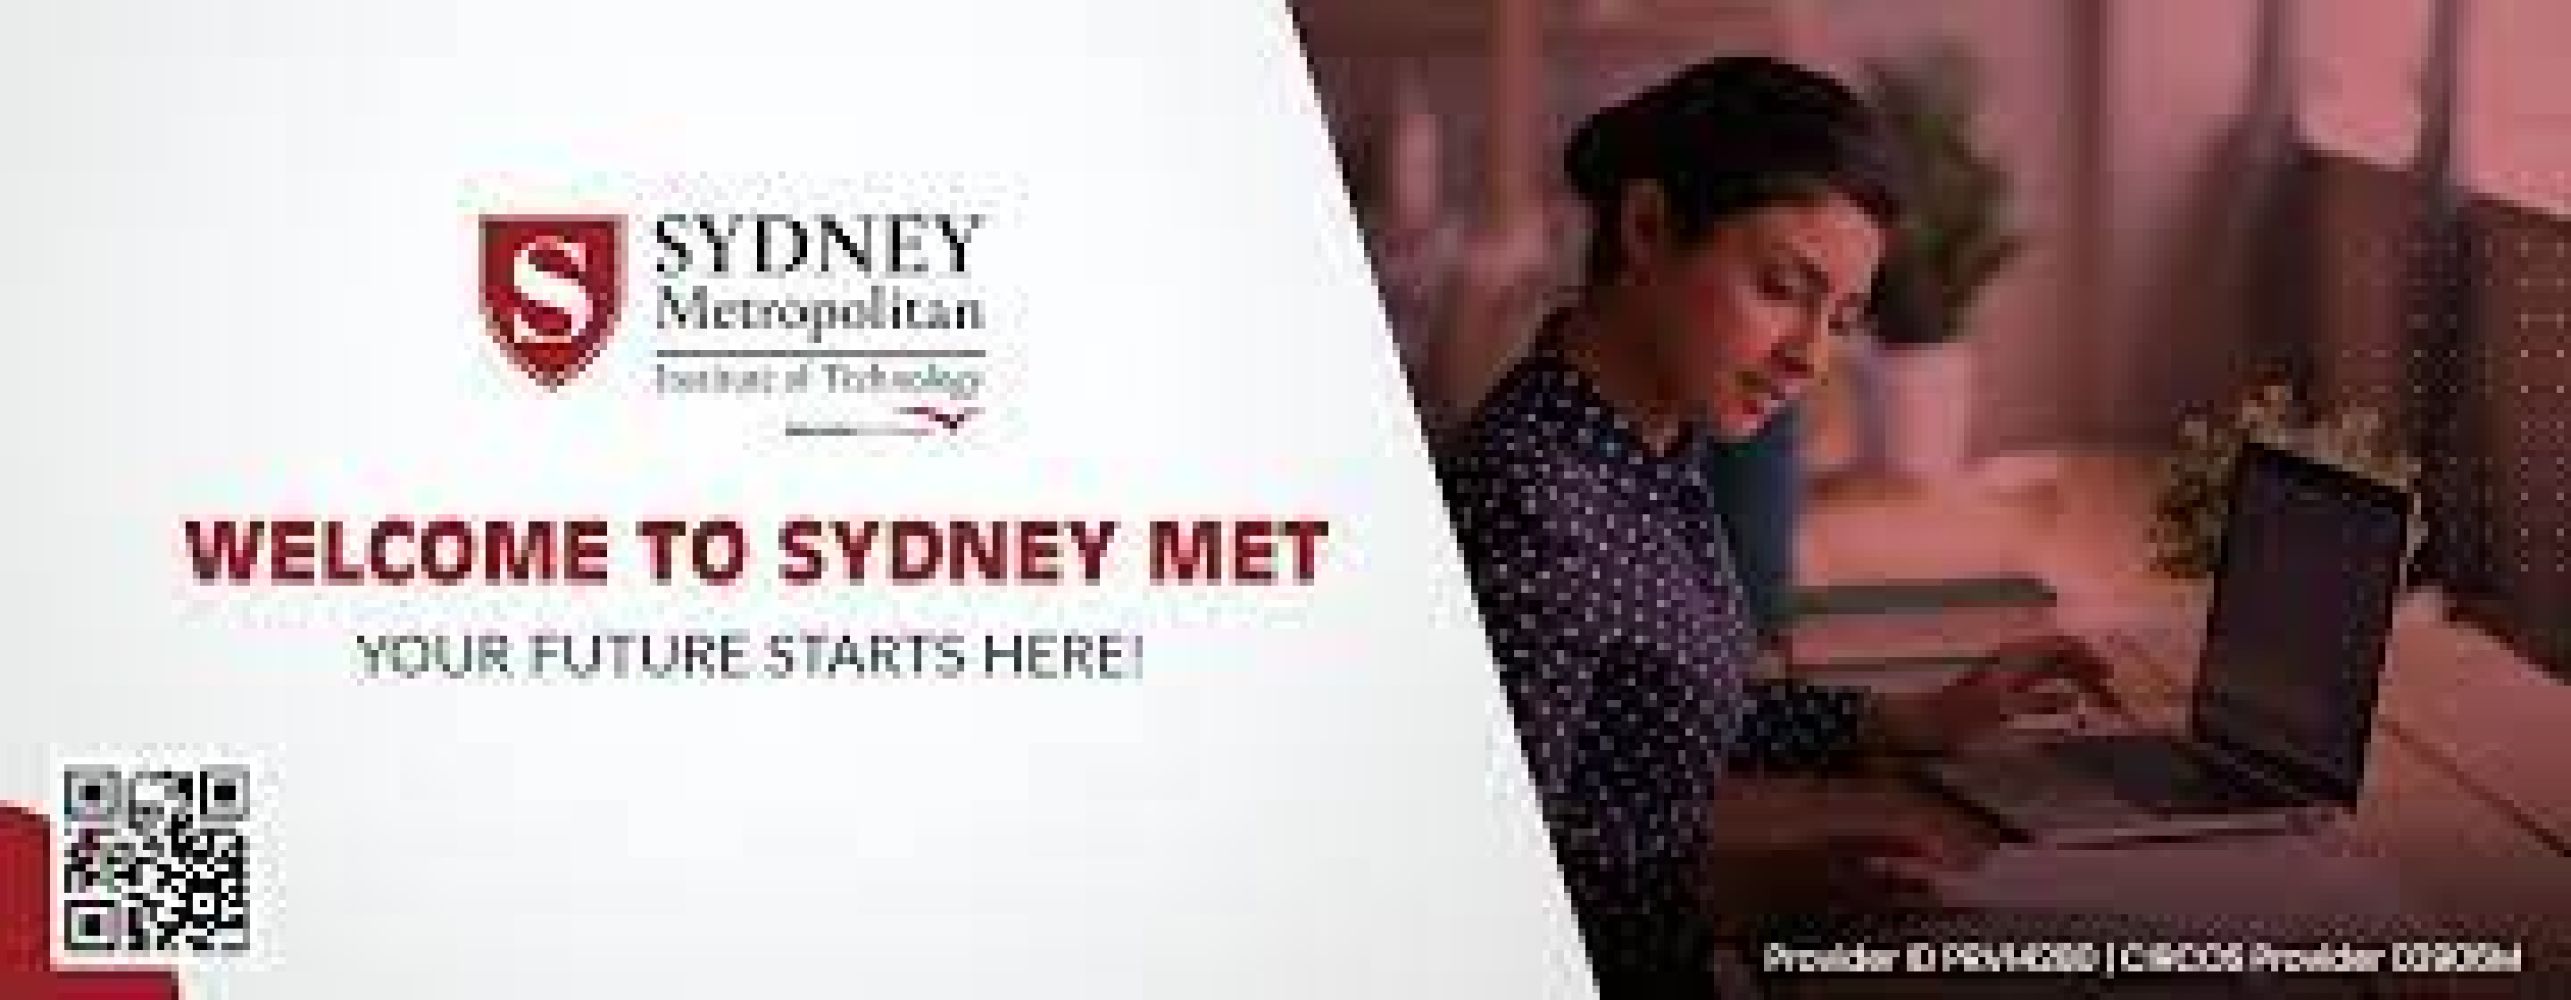 Sydney Metropolitan Institute of Technology